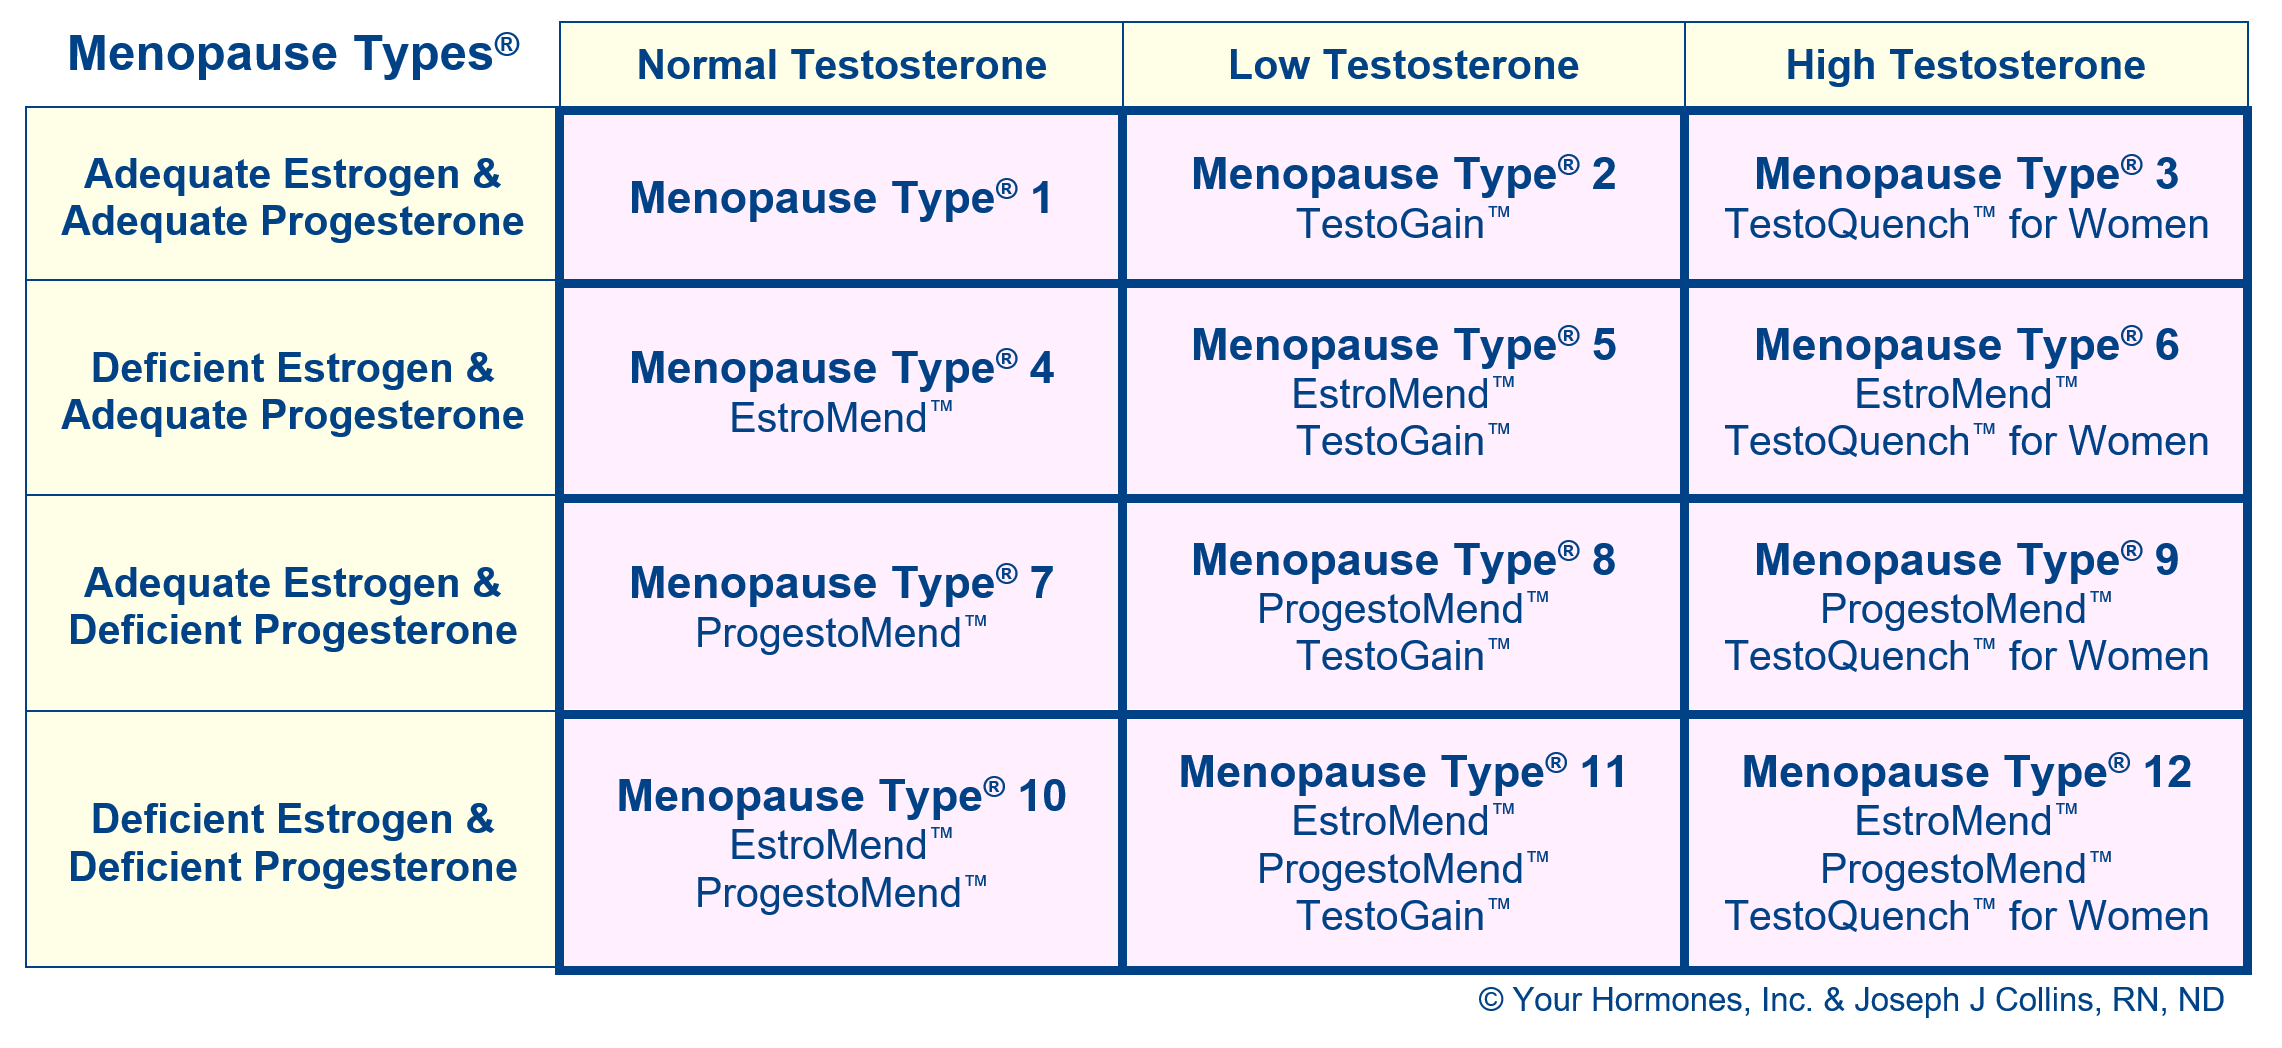 Menopause Types® Your Hormones